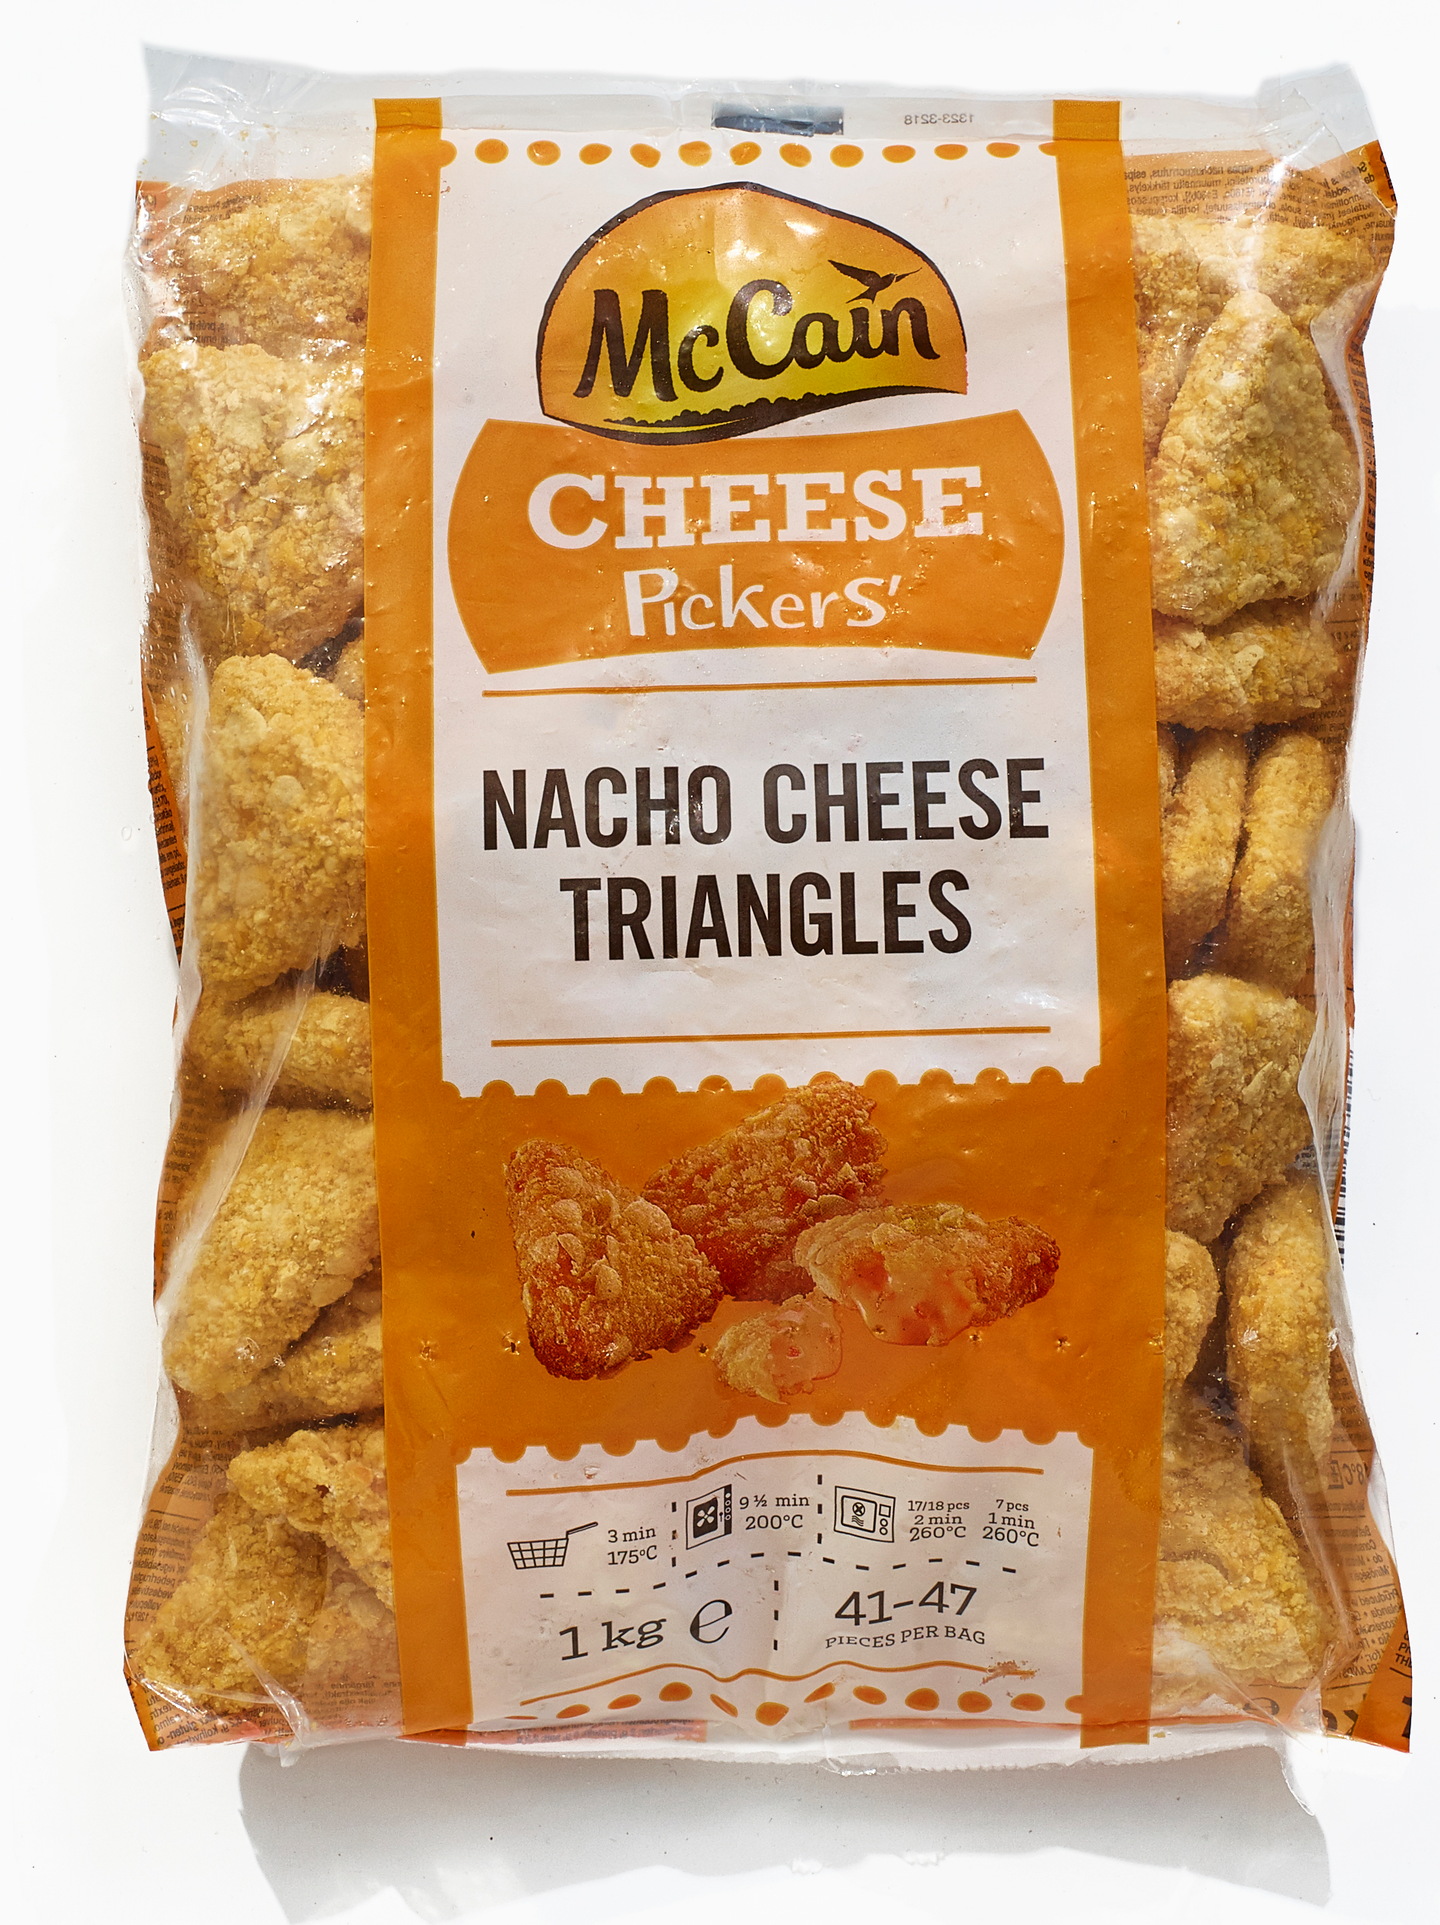 McCain cheese pickers nacho cheese triangles 1kg pakaste